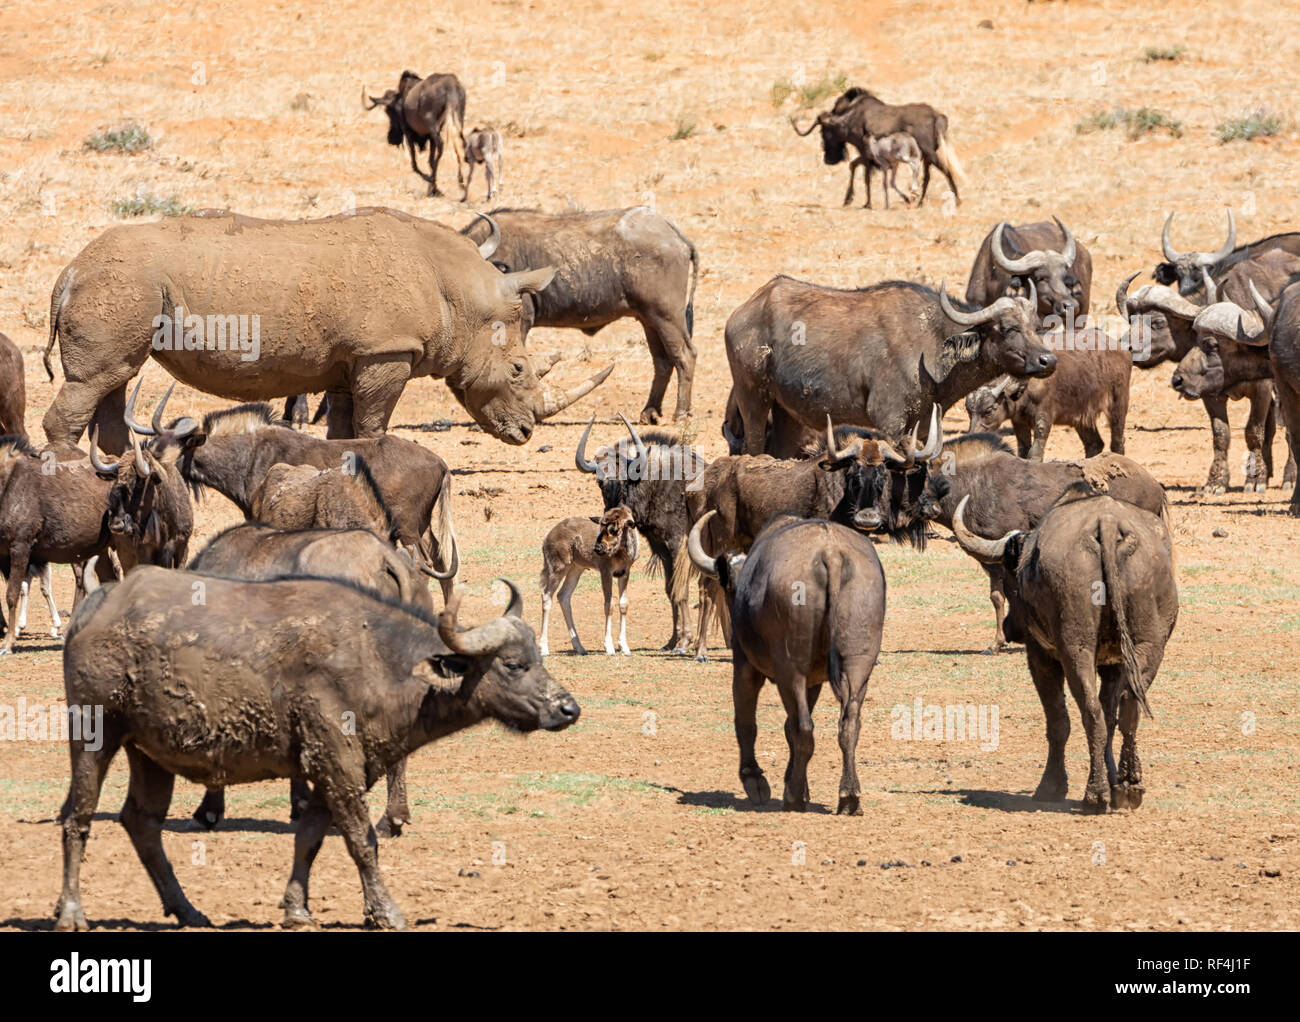 Rhino And Buffalo High Resolution Stock Photography Images - Alamy